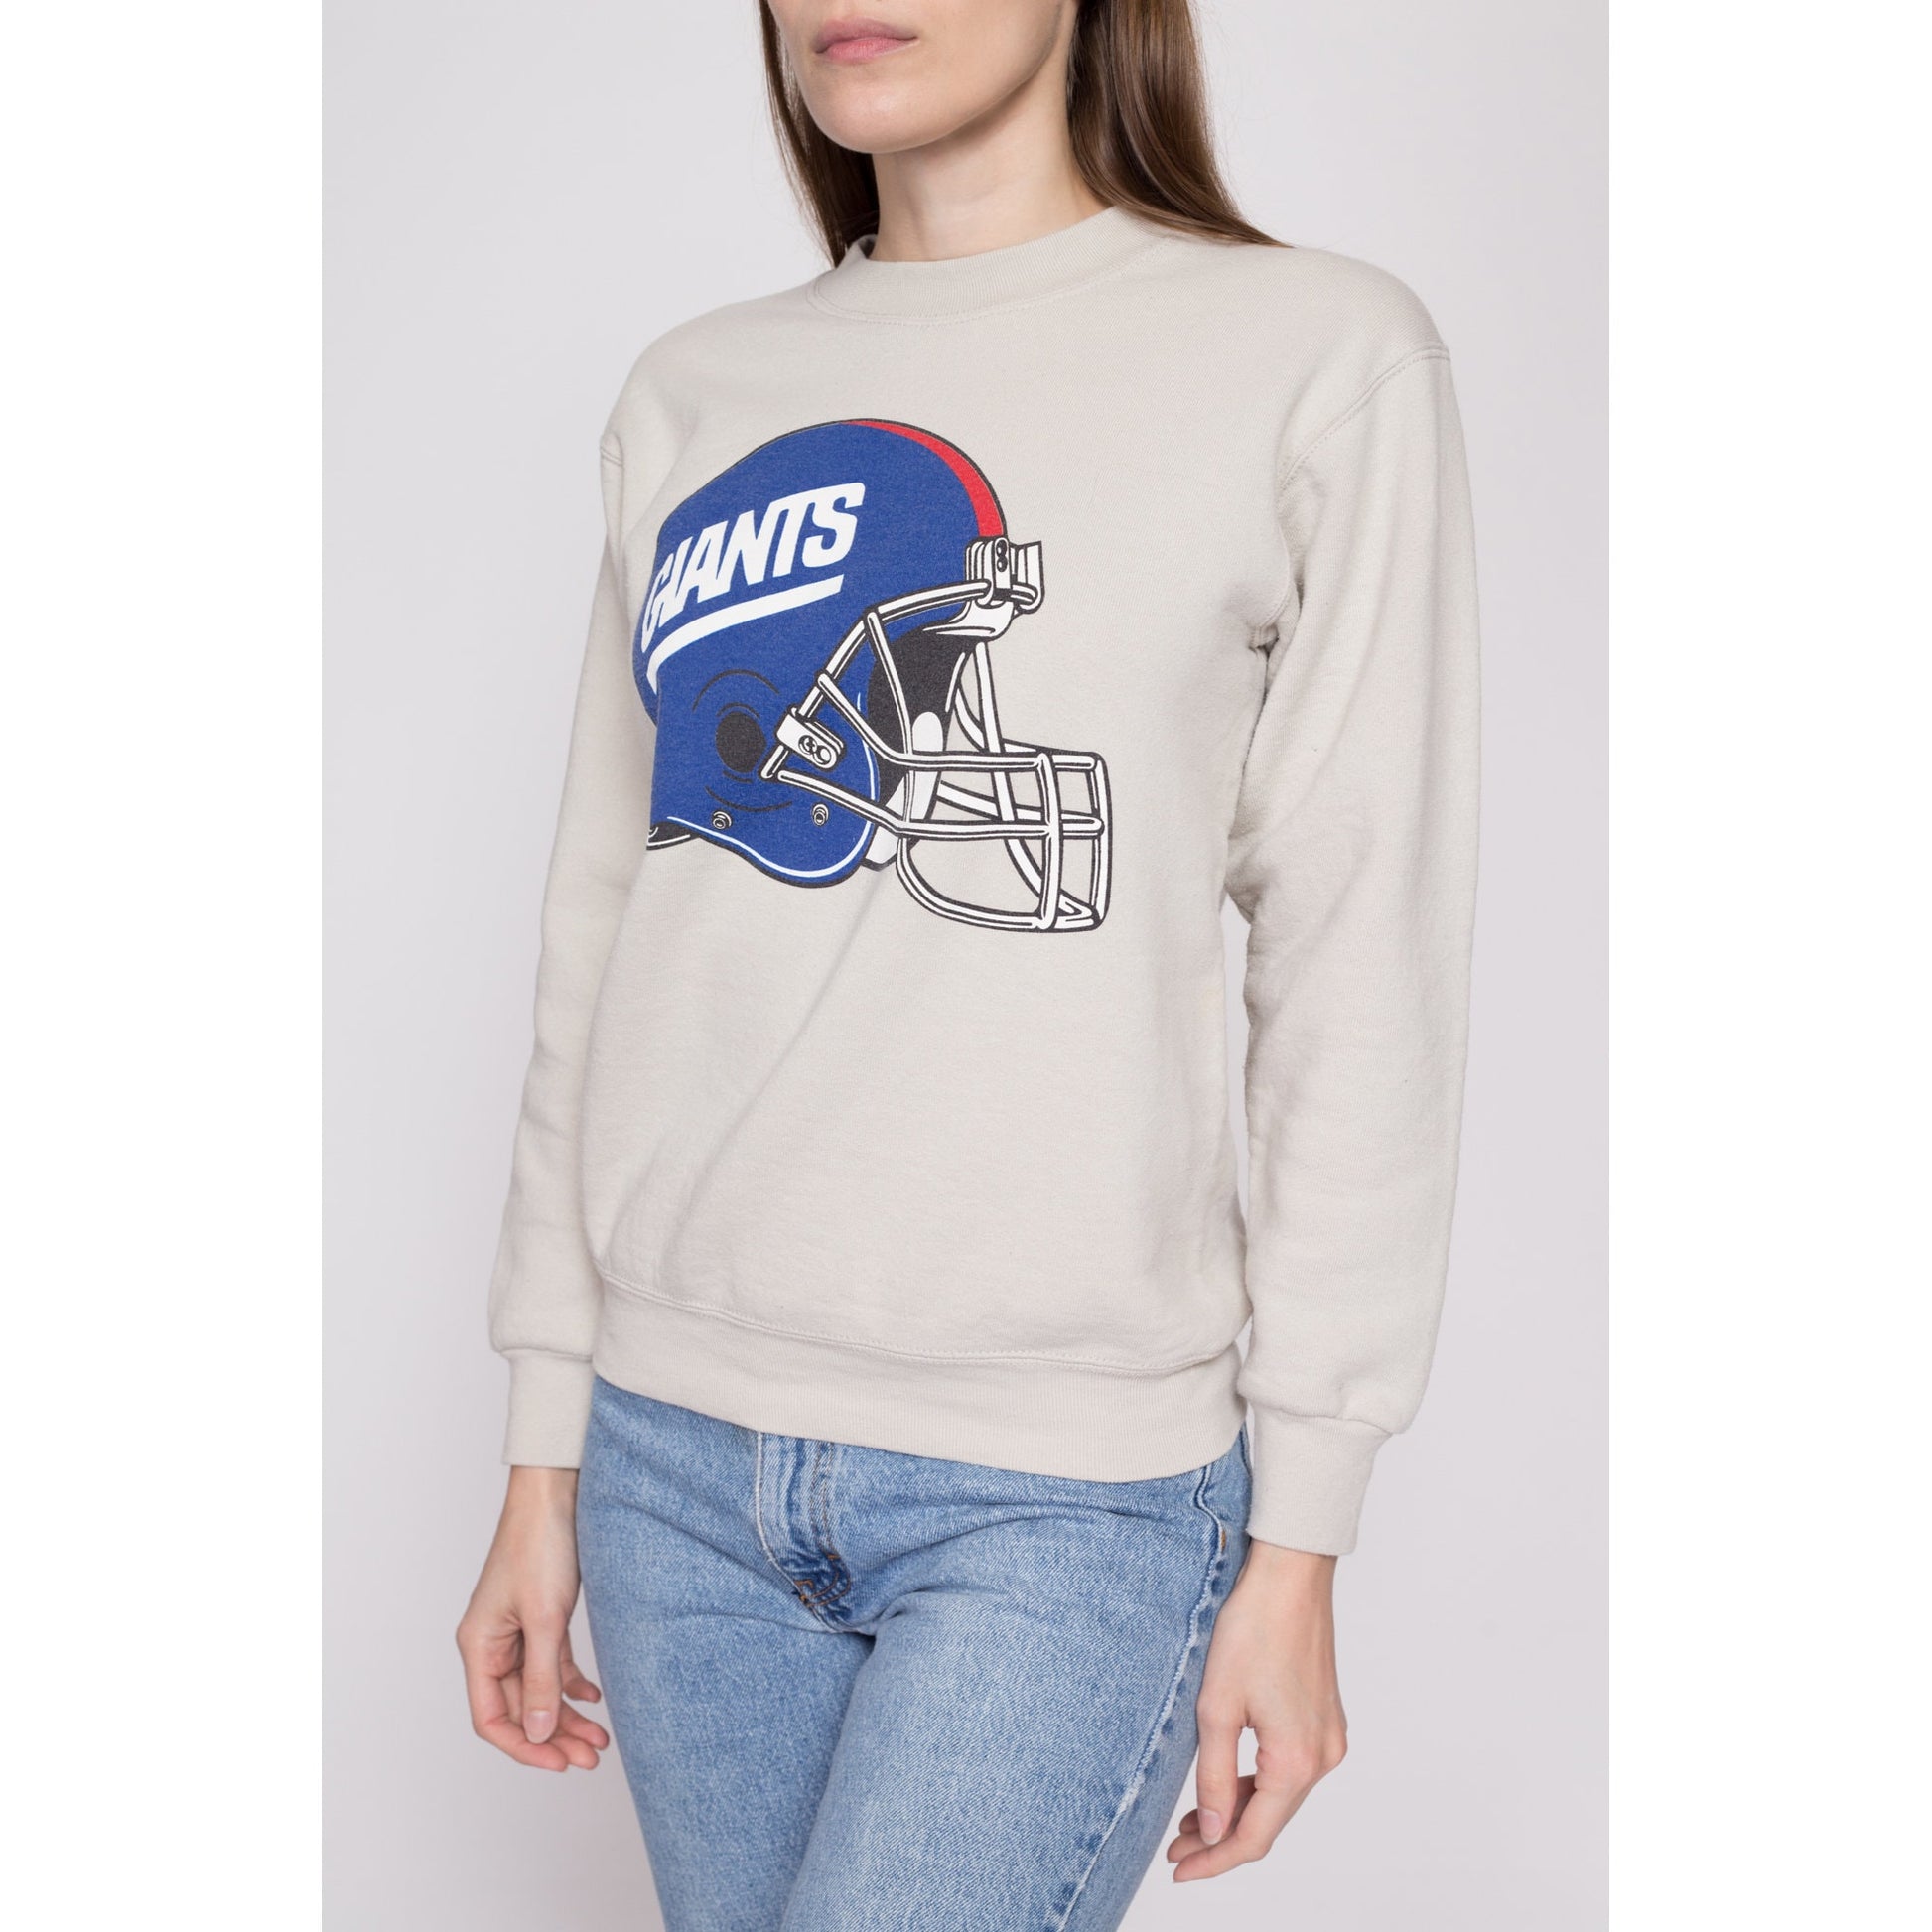 XS-S| 90s New York Giants Sweatshirt - Men's XS, Women's Small | Vintage NFL Football Graphic Crewneck Pullover